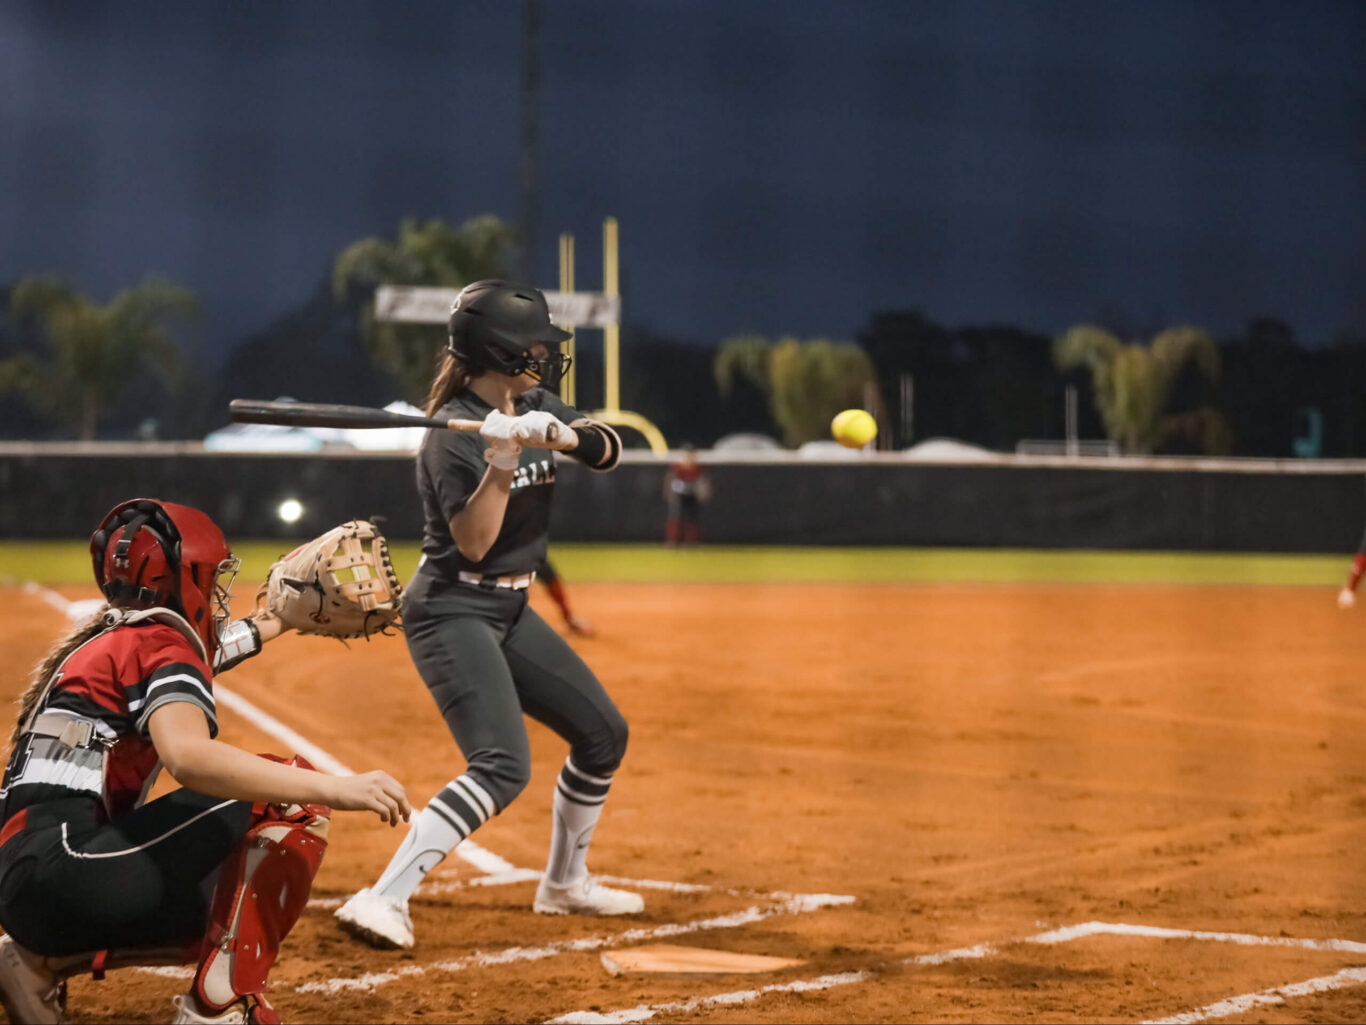 A girls softball player swinging a bat at a ball.